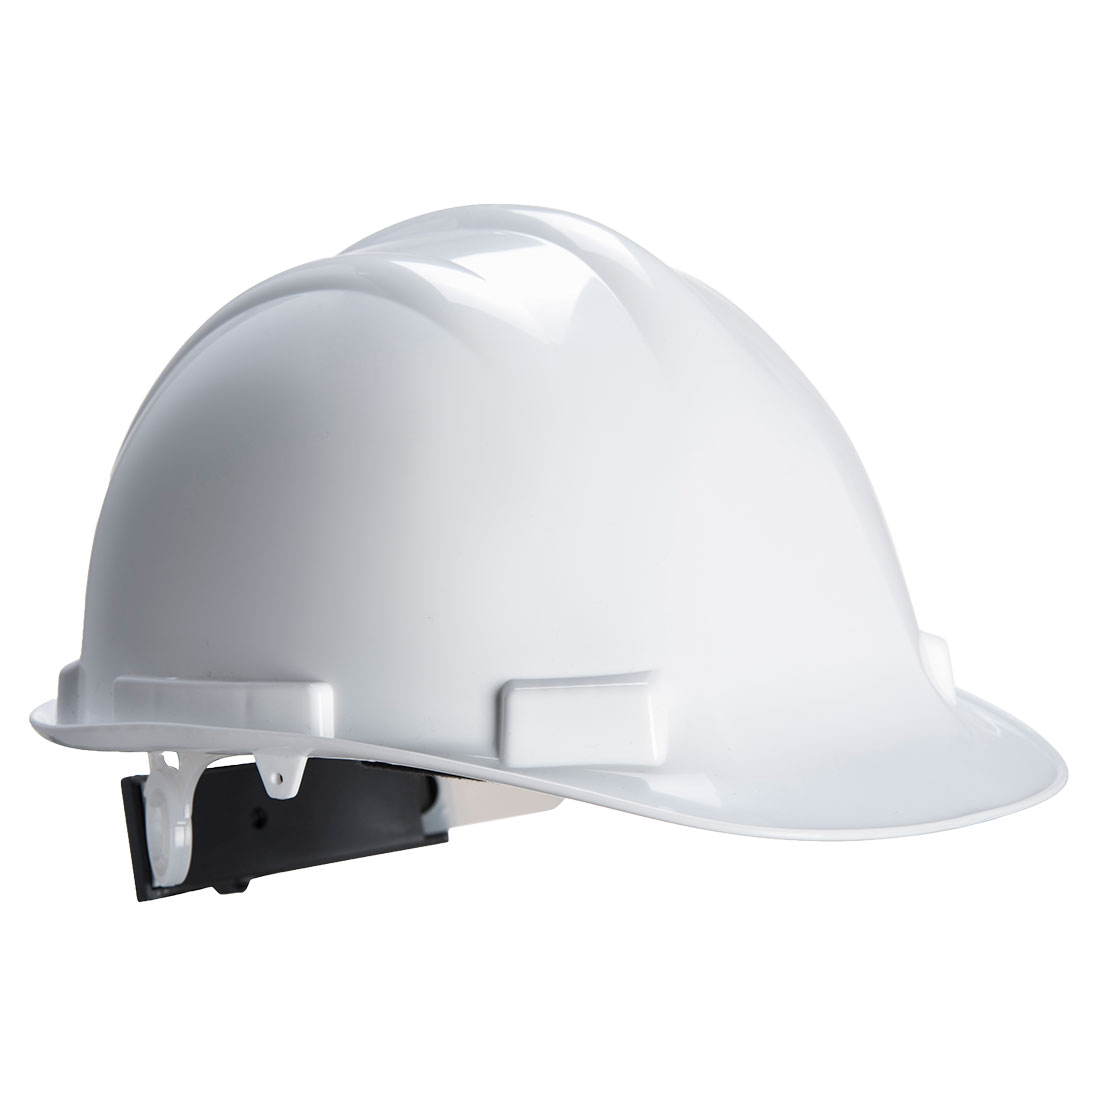 Expertbase Wheel Safety Helmet Hard Hat With Ratchet